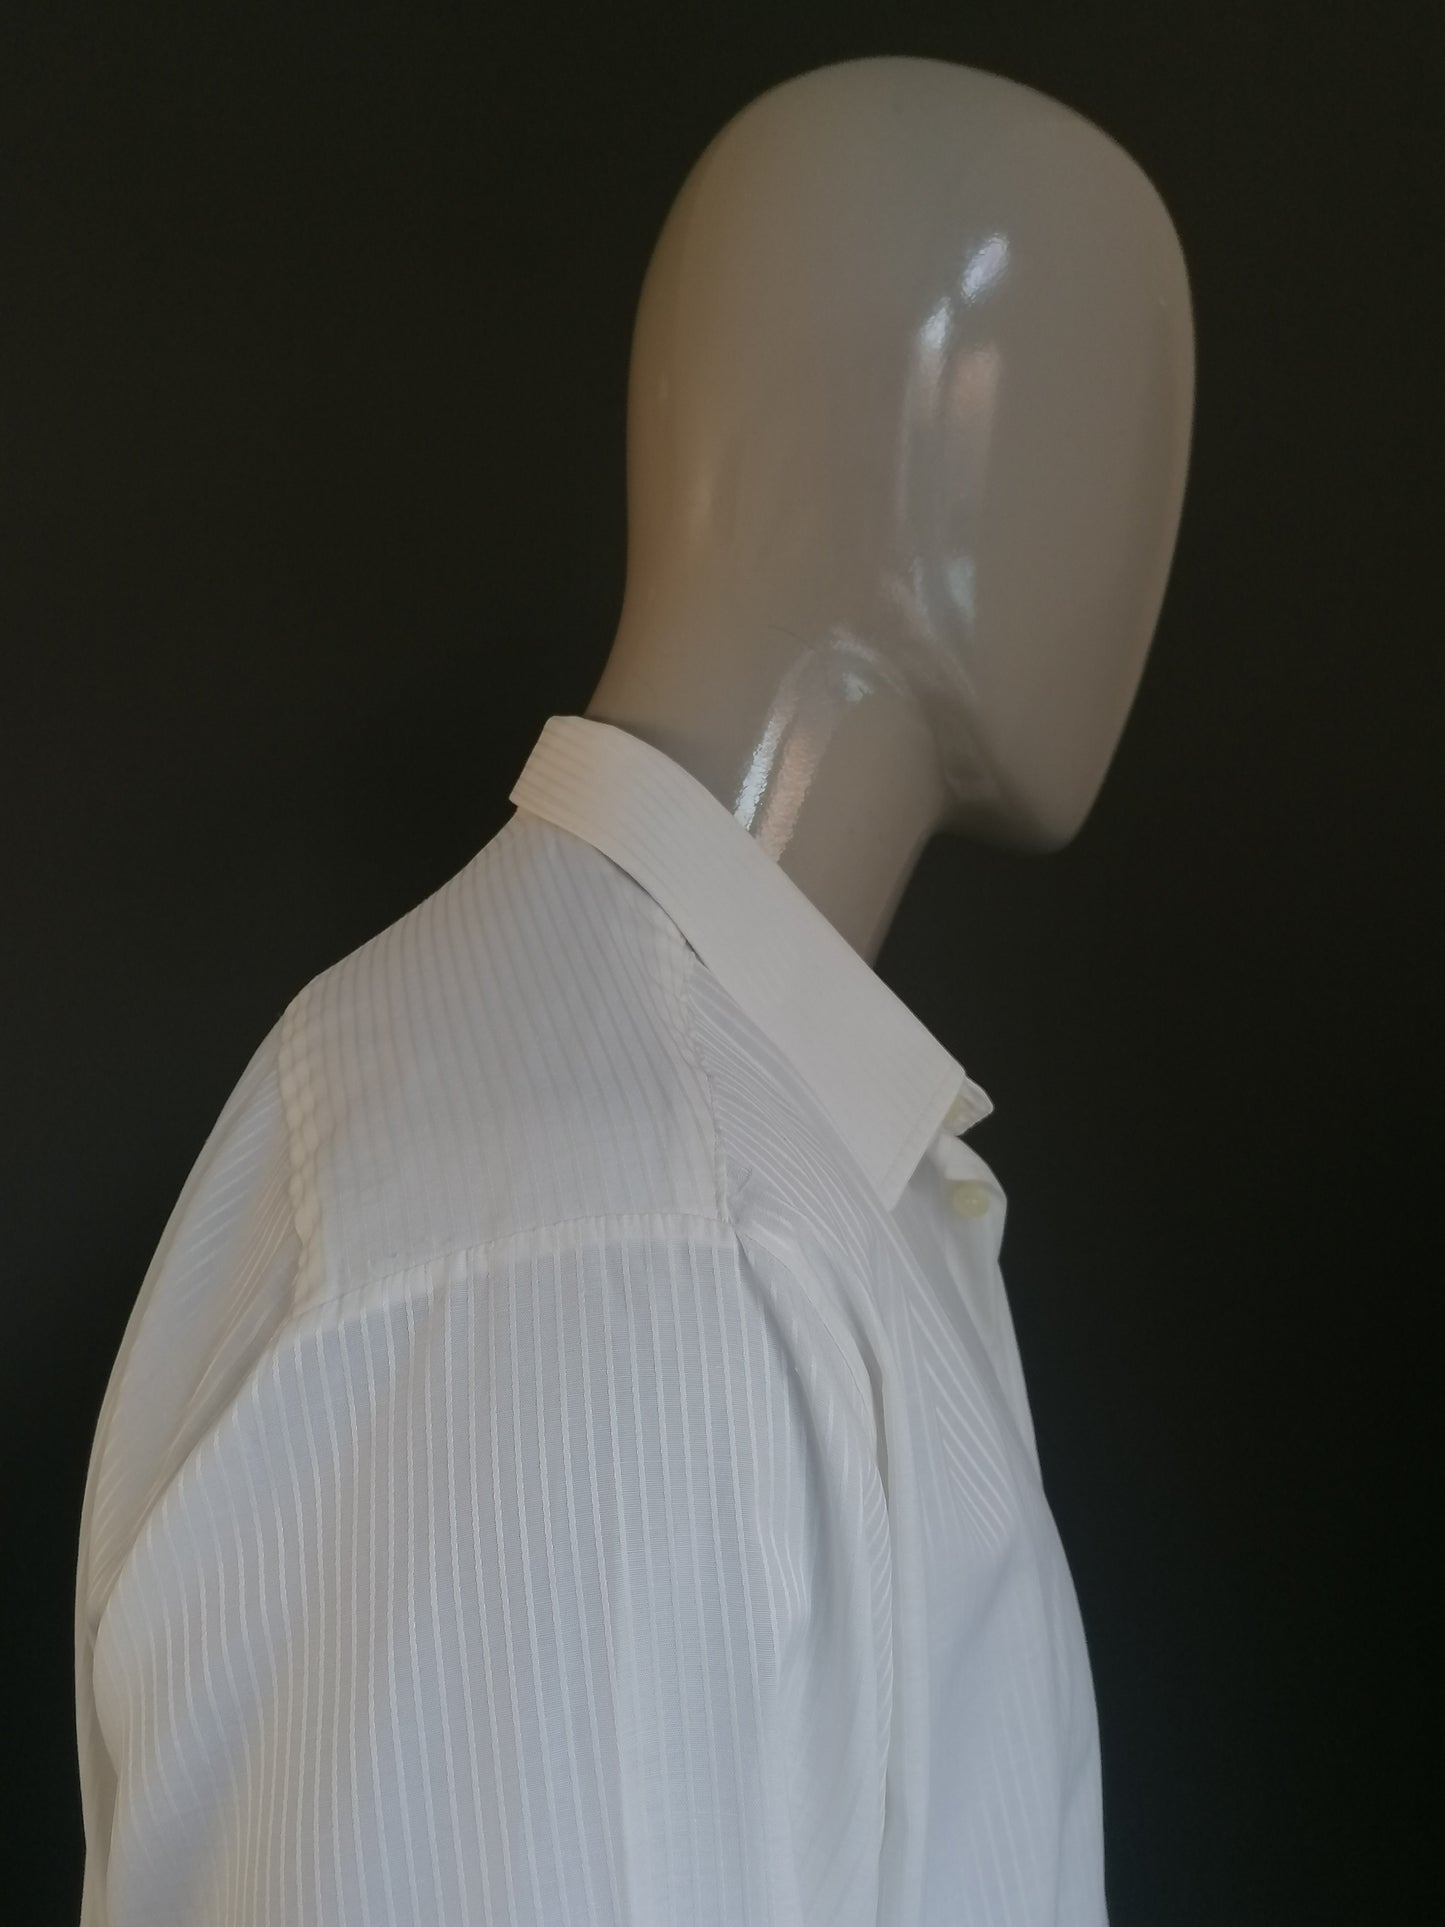 Shirt vintage Mister. Motivo a strisce lucenti beige. Taglia XL.